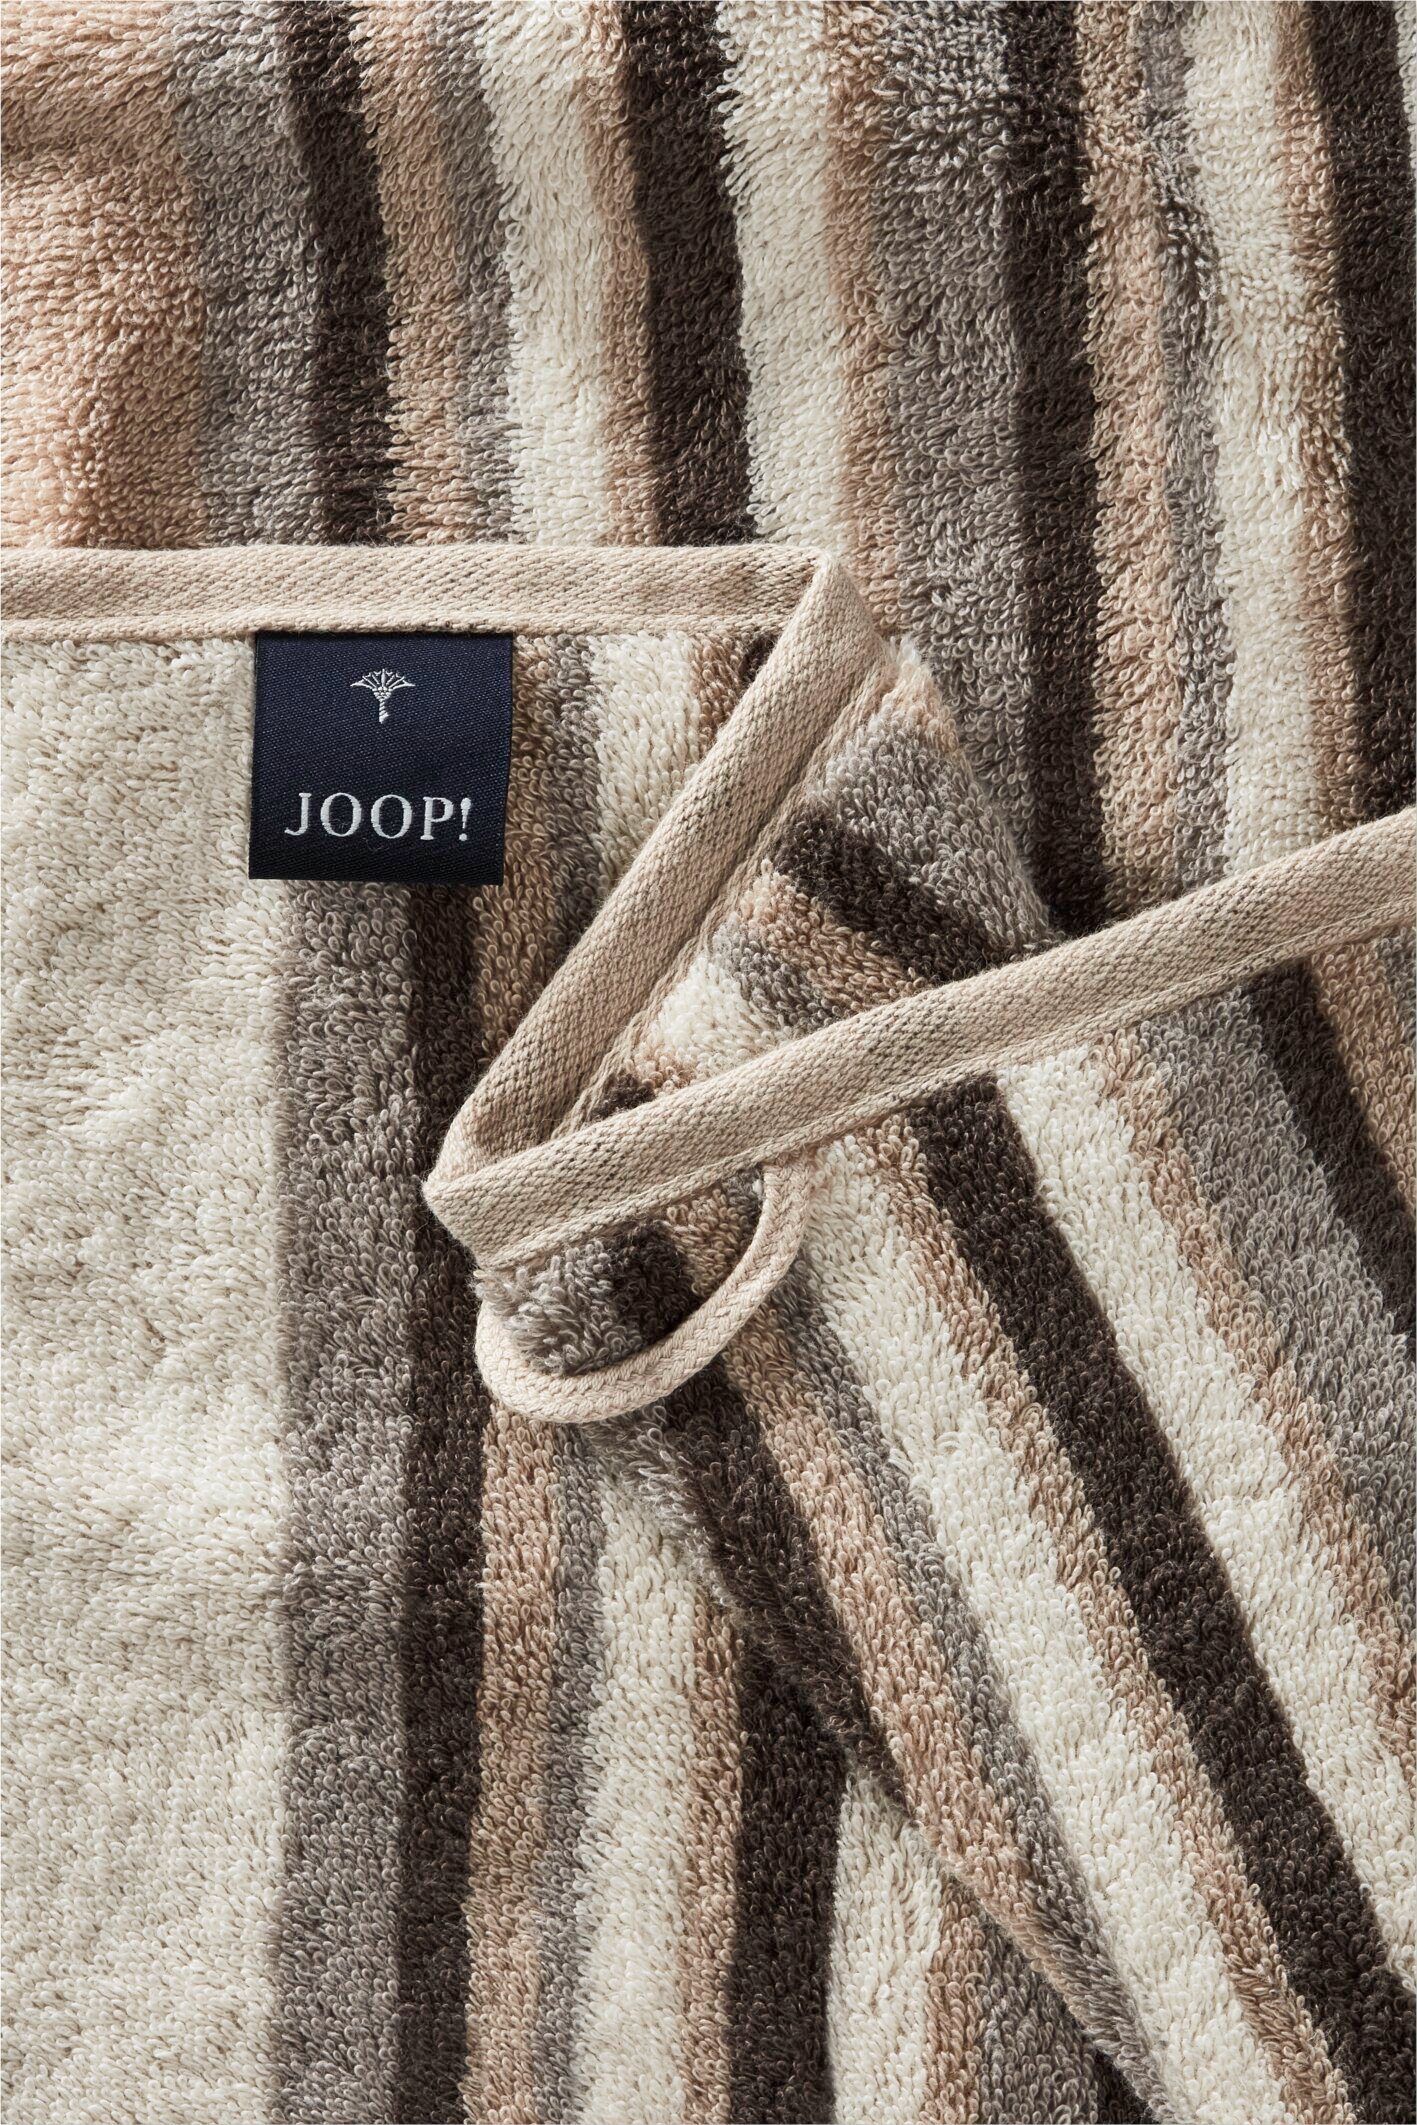 JOOP! STRIPES Textil Handtuch-Set, LIVING Handtücher Joop! MOVE - Sand (2-St)